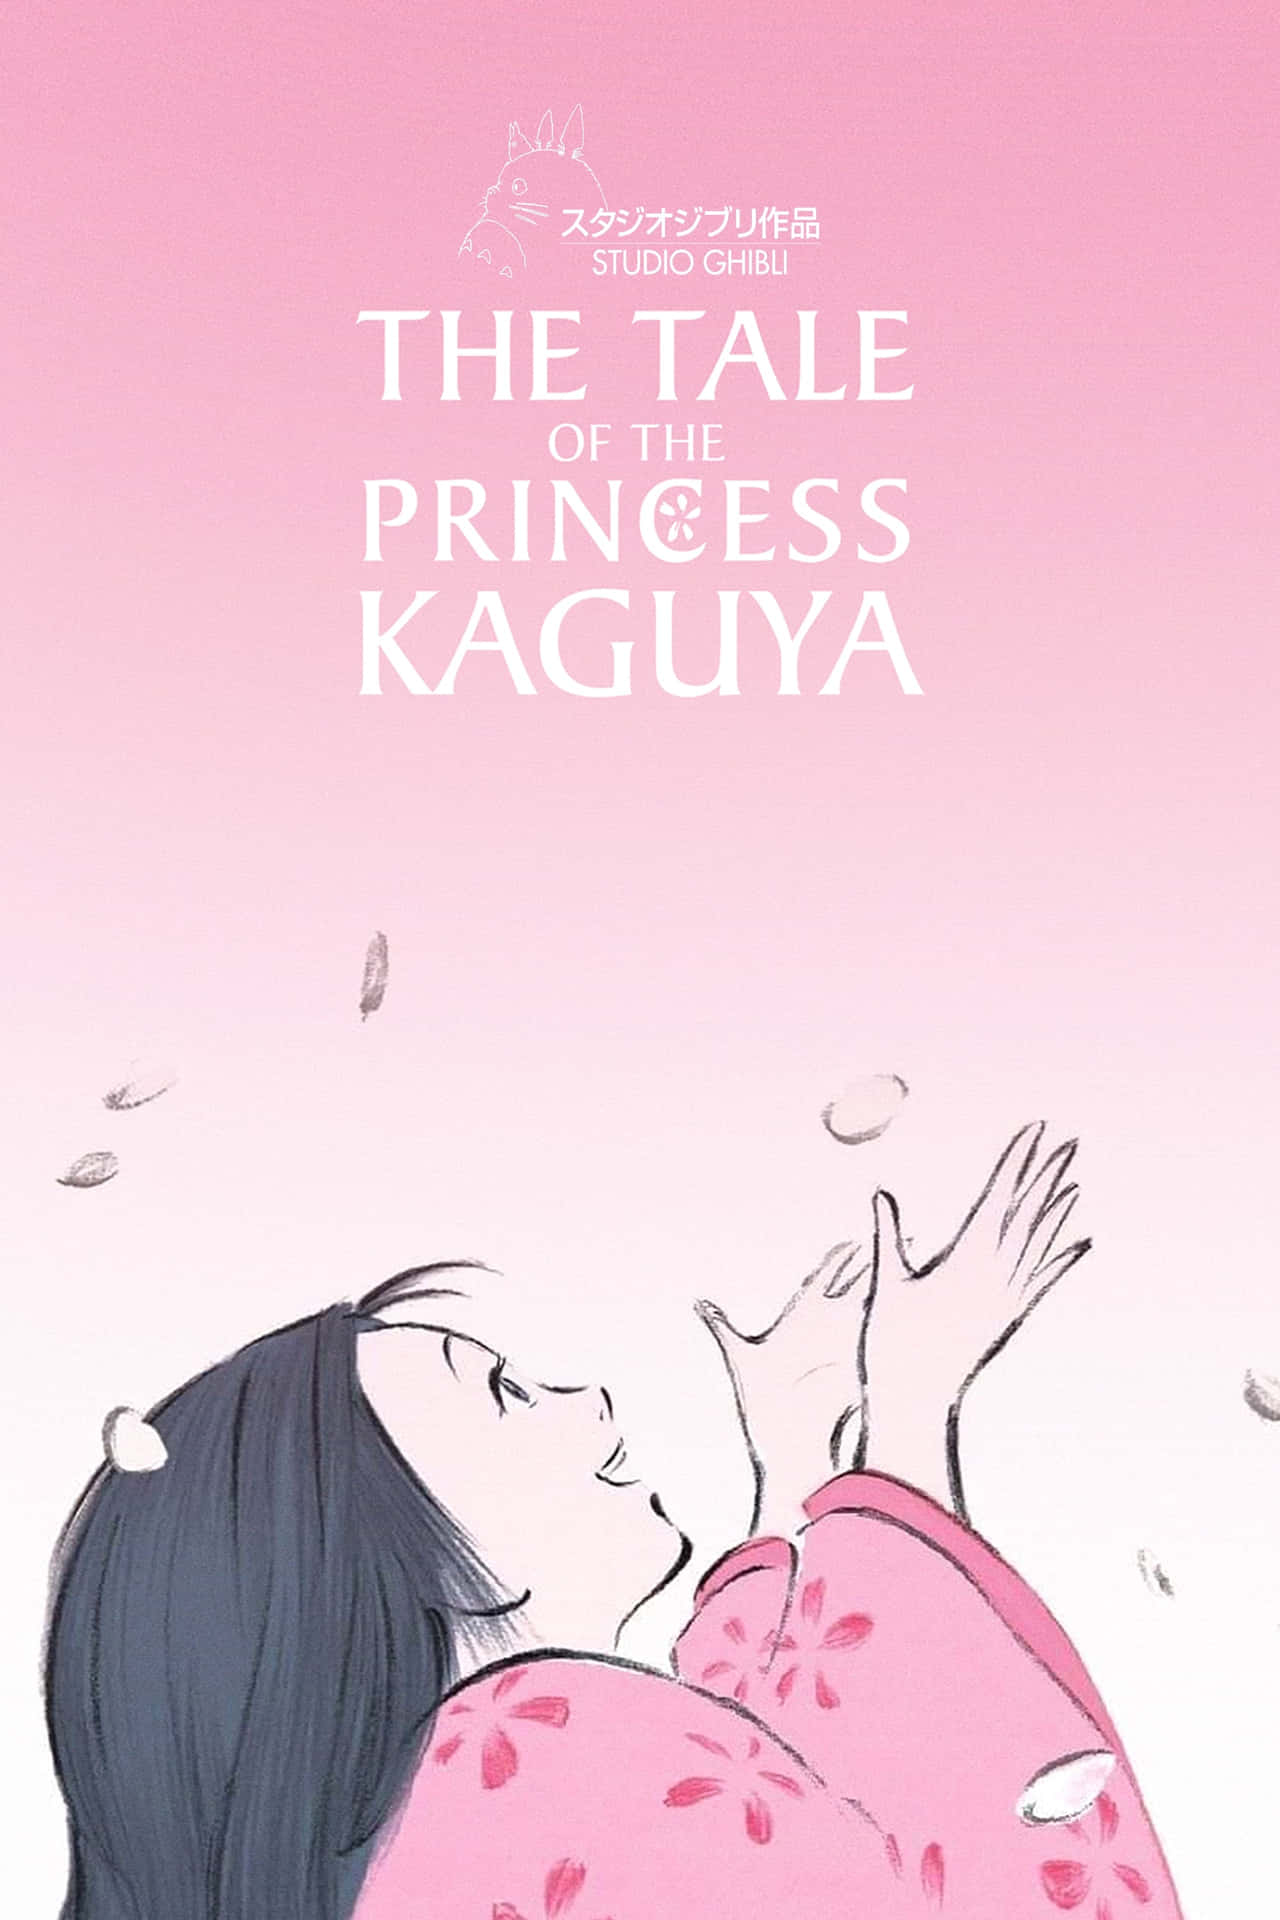 The enchanting Princess Kaguya surrounded by magical light Wallpaper